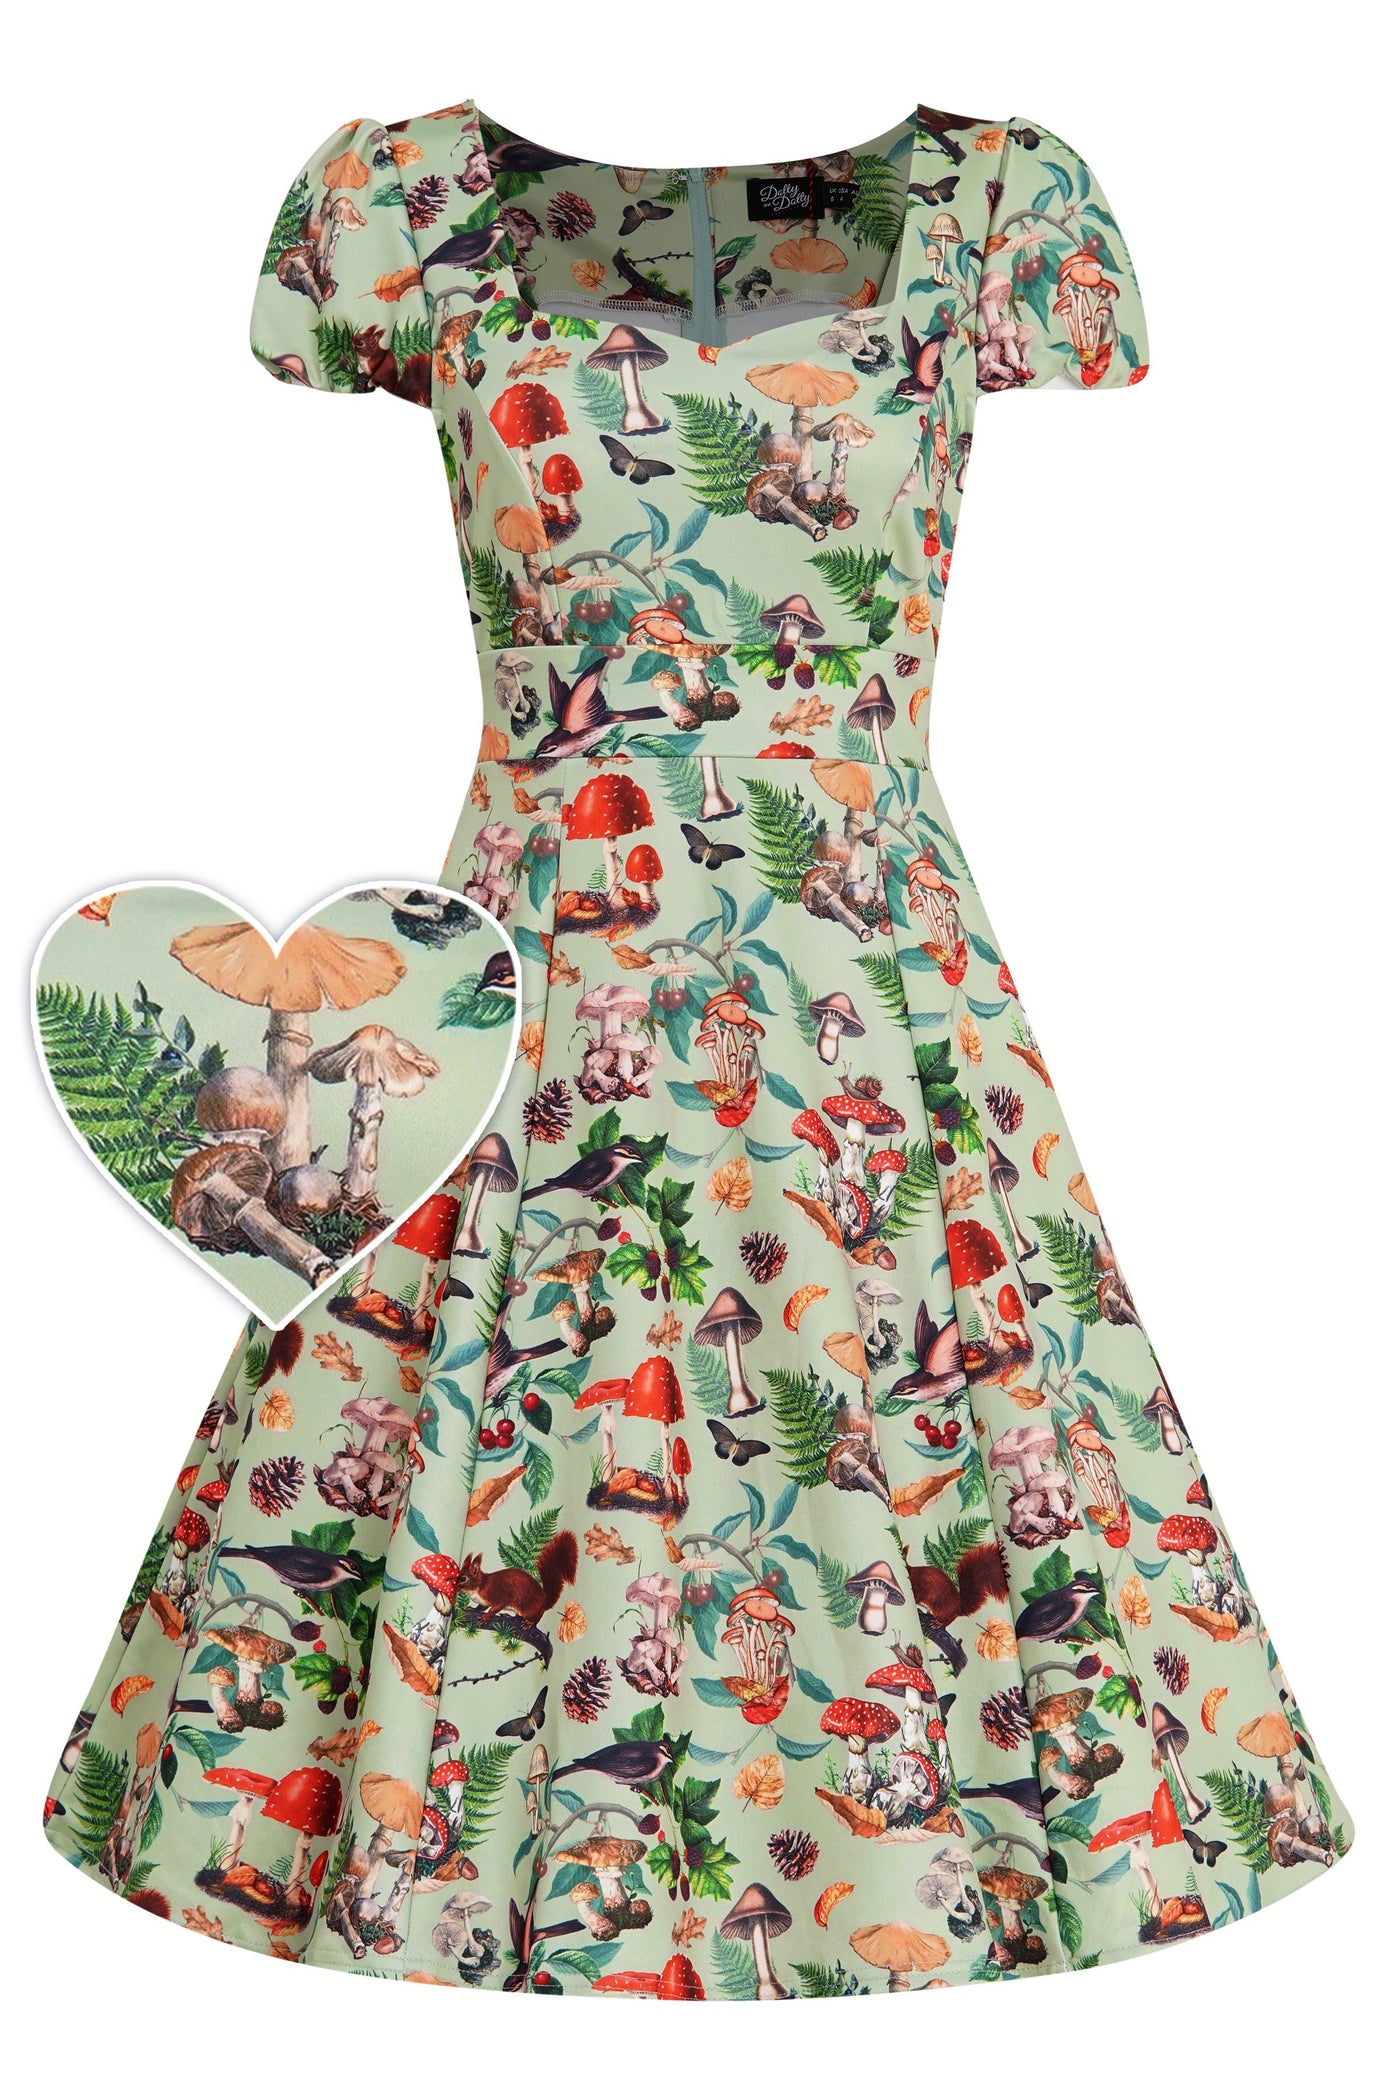 Cap Sleeved Dress in Mushroom, Squirrels Forest Print